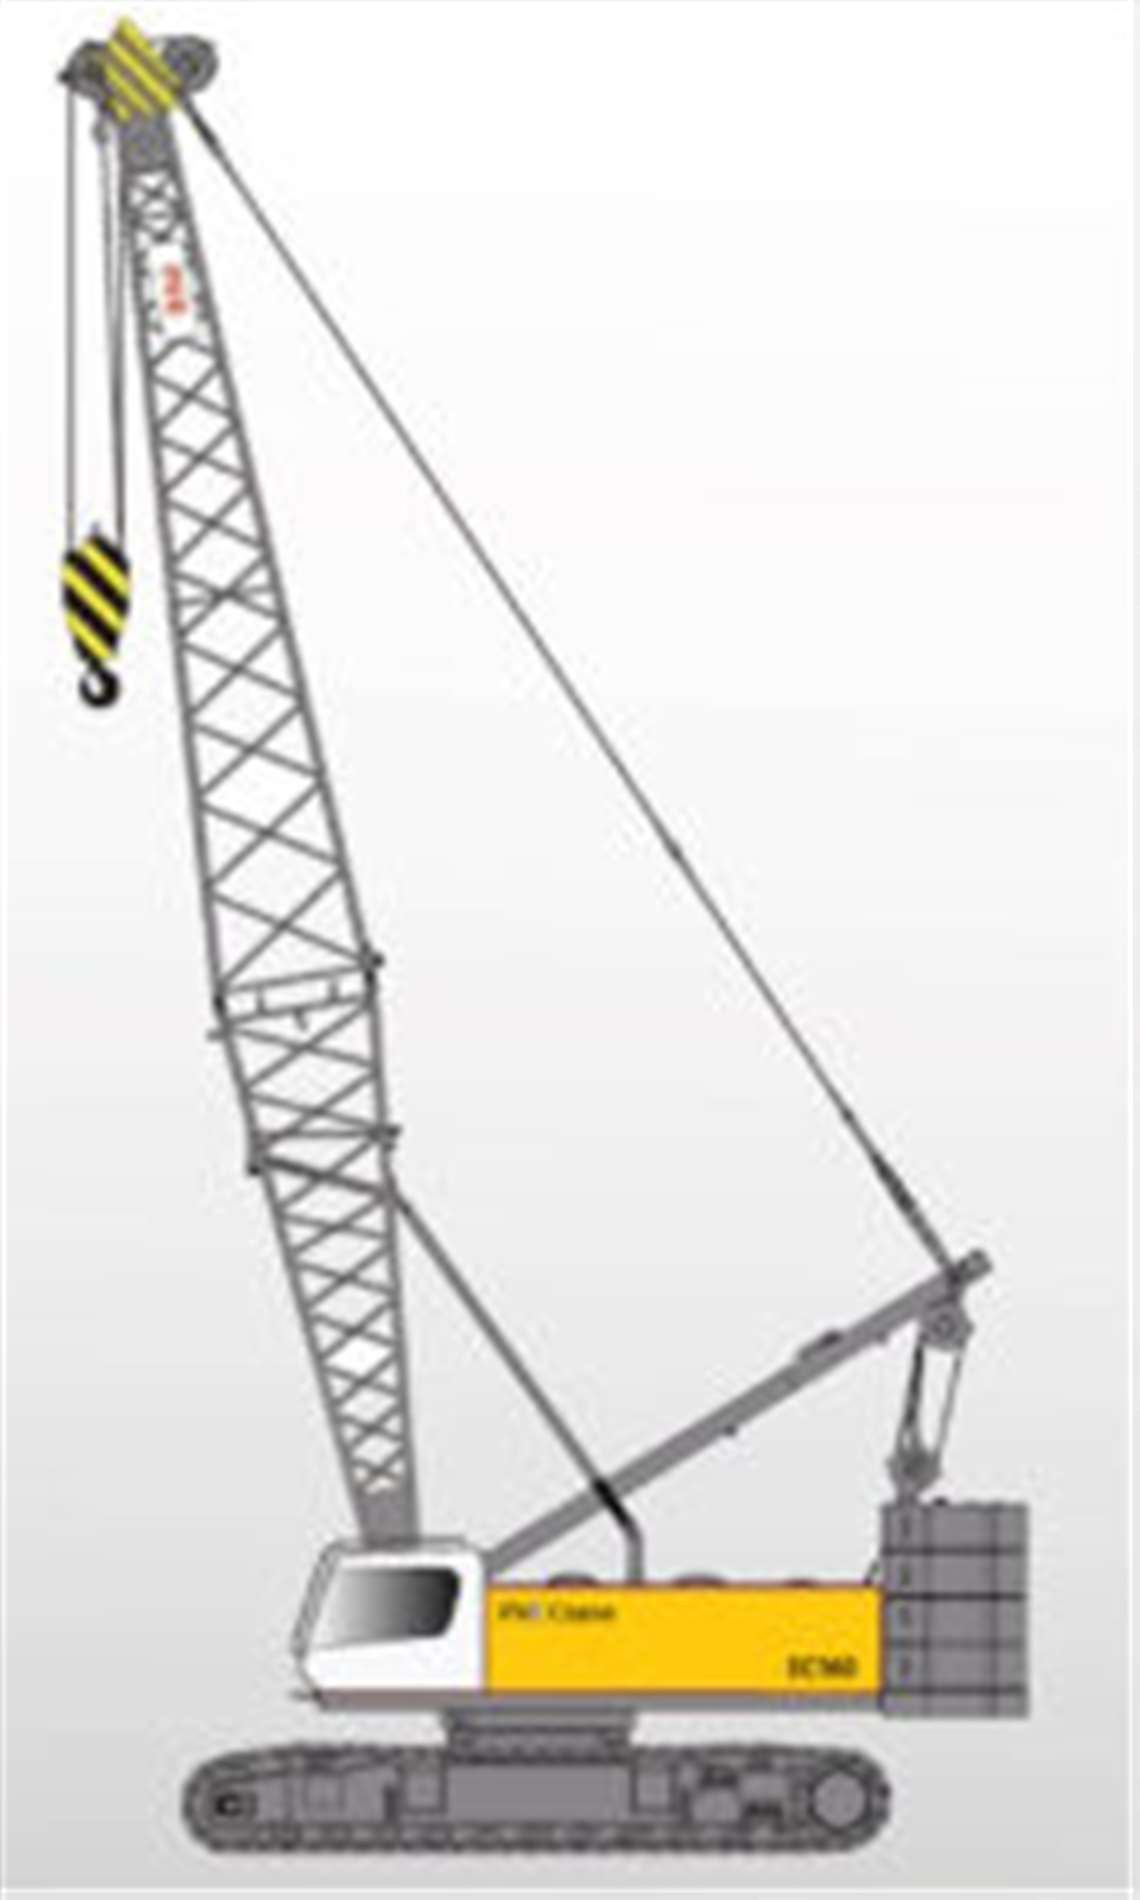 The PVE Crane model EC160 is a 160 tonne capacity lattice boom battery-electric crawler crane